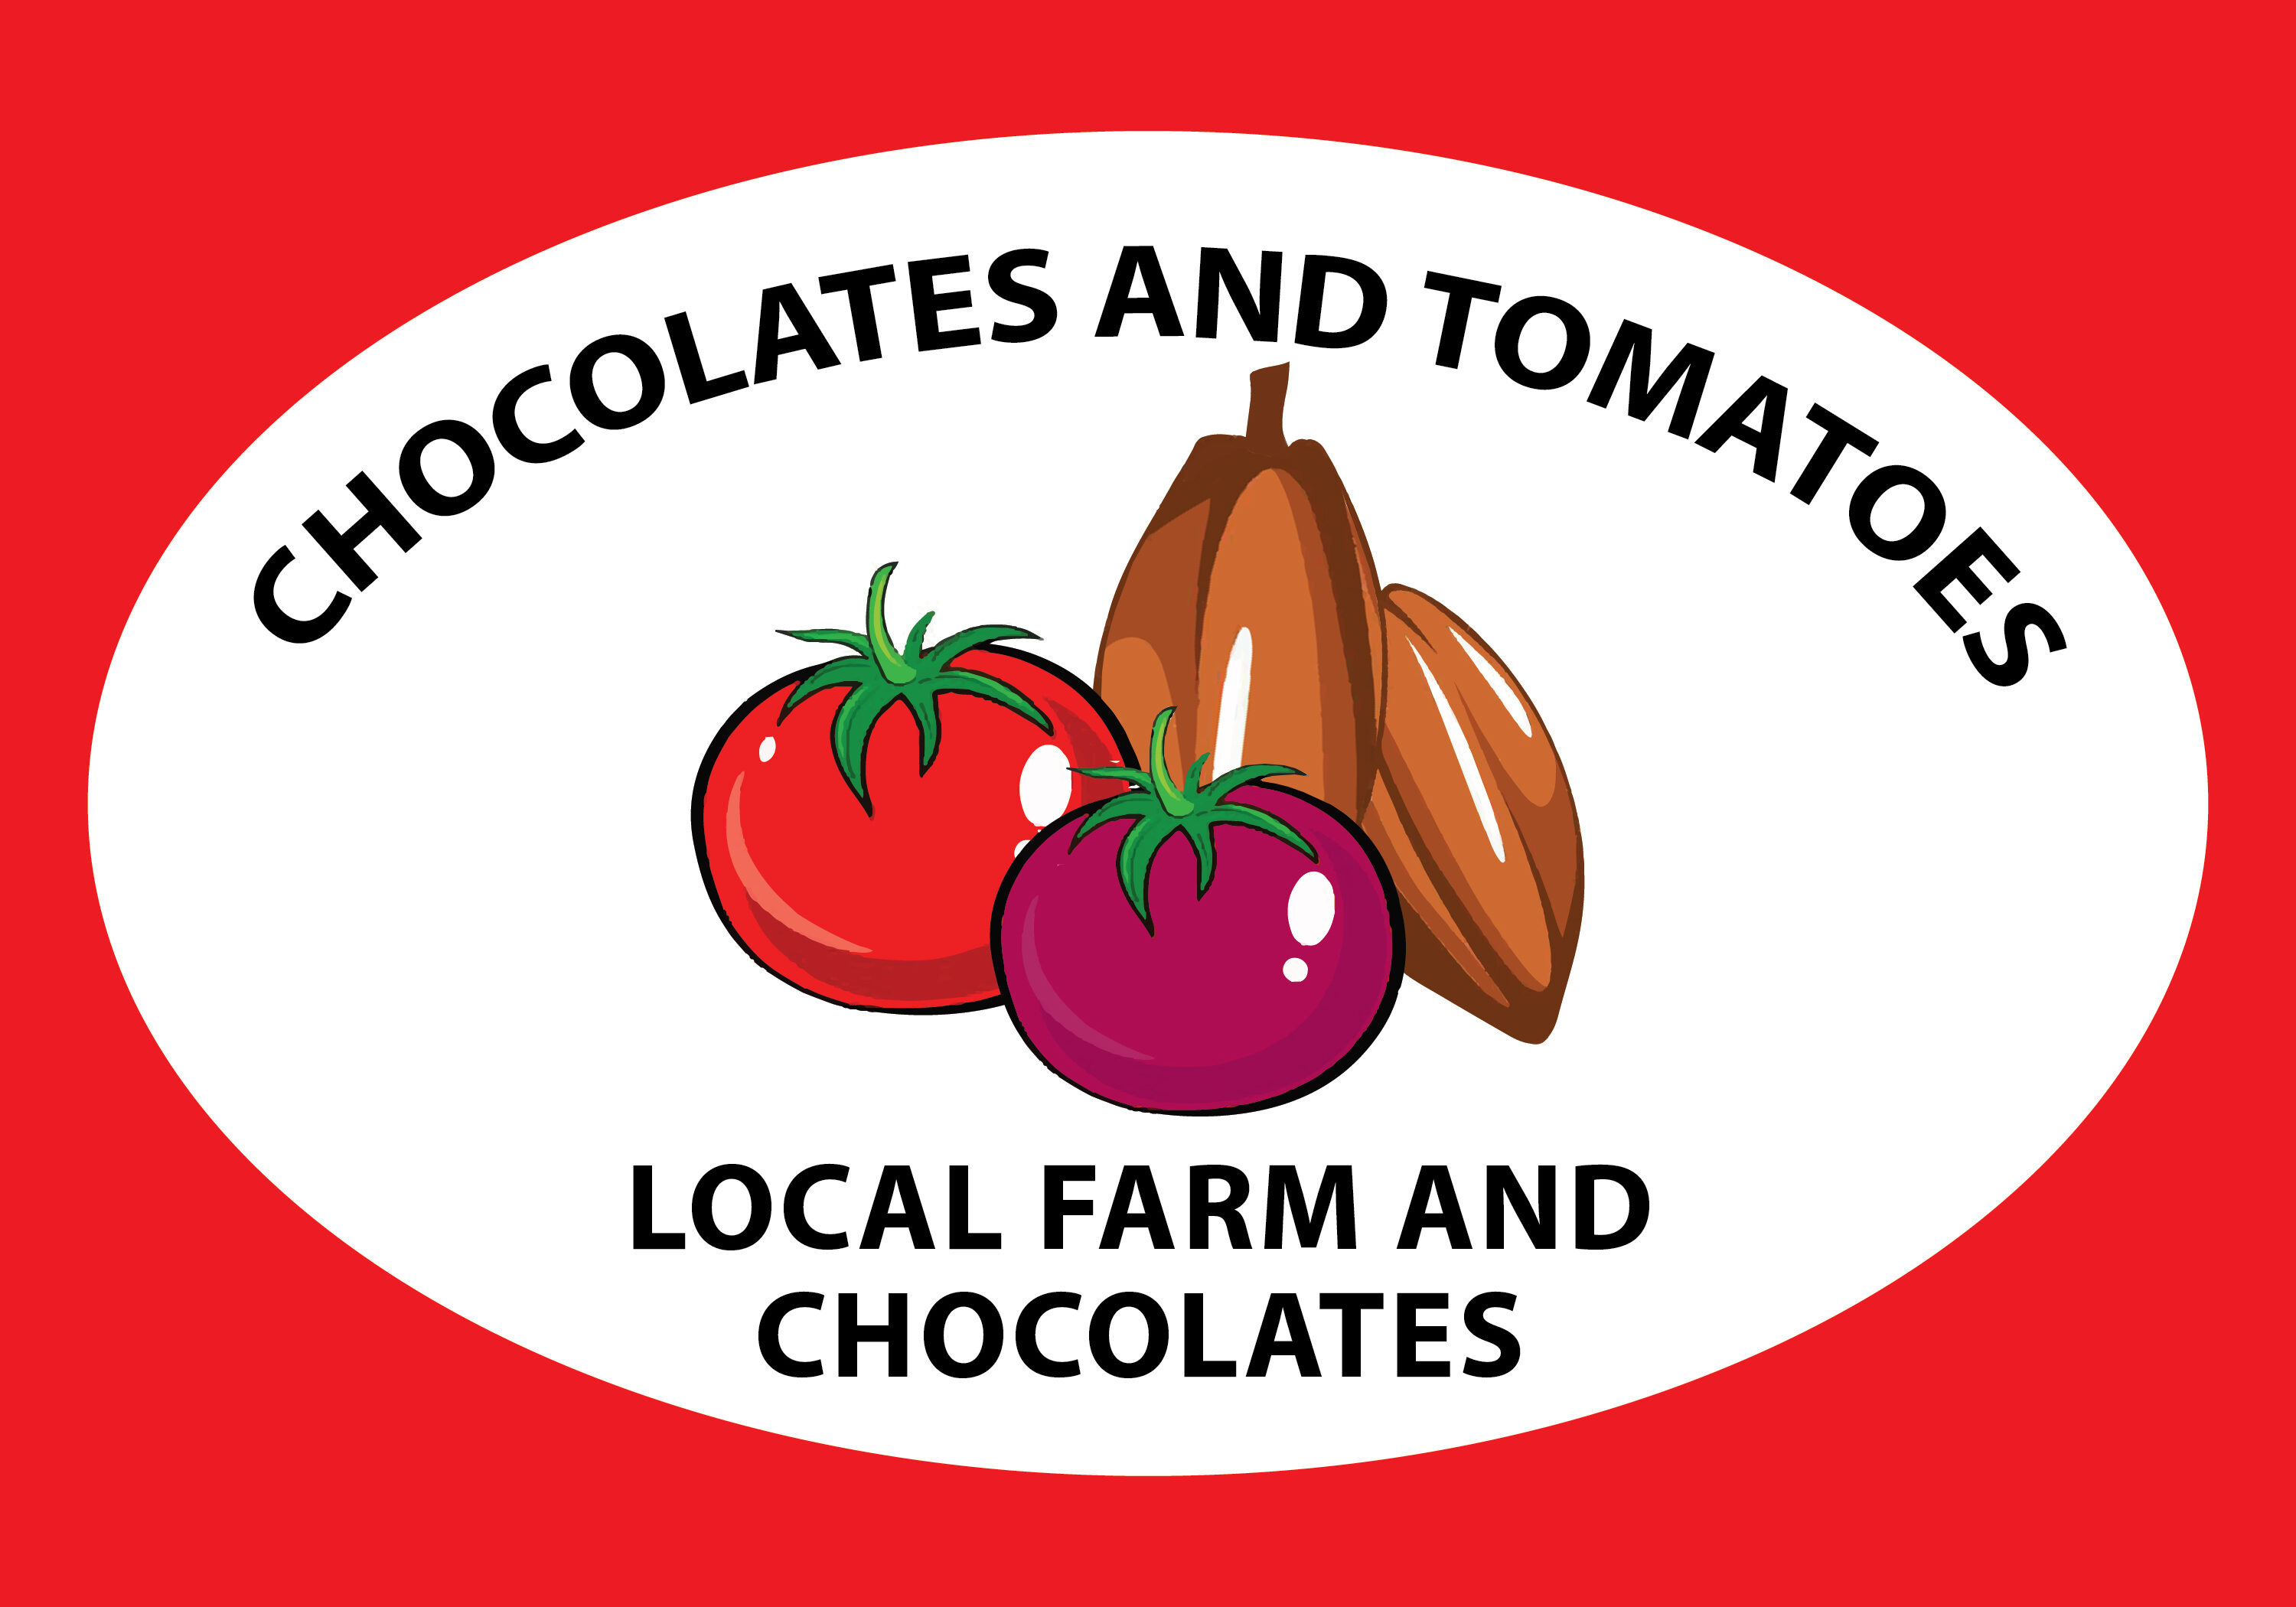 Chocolate and Tomatoes Farm